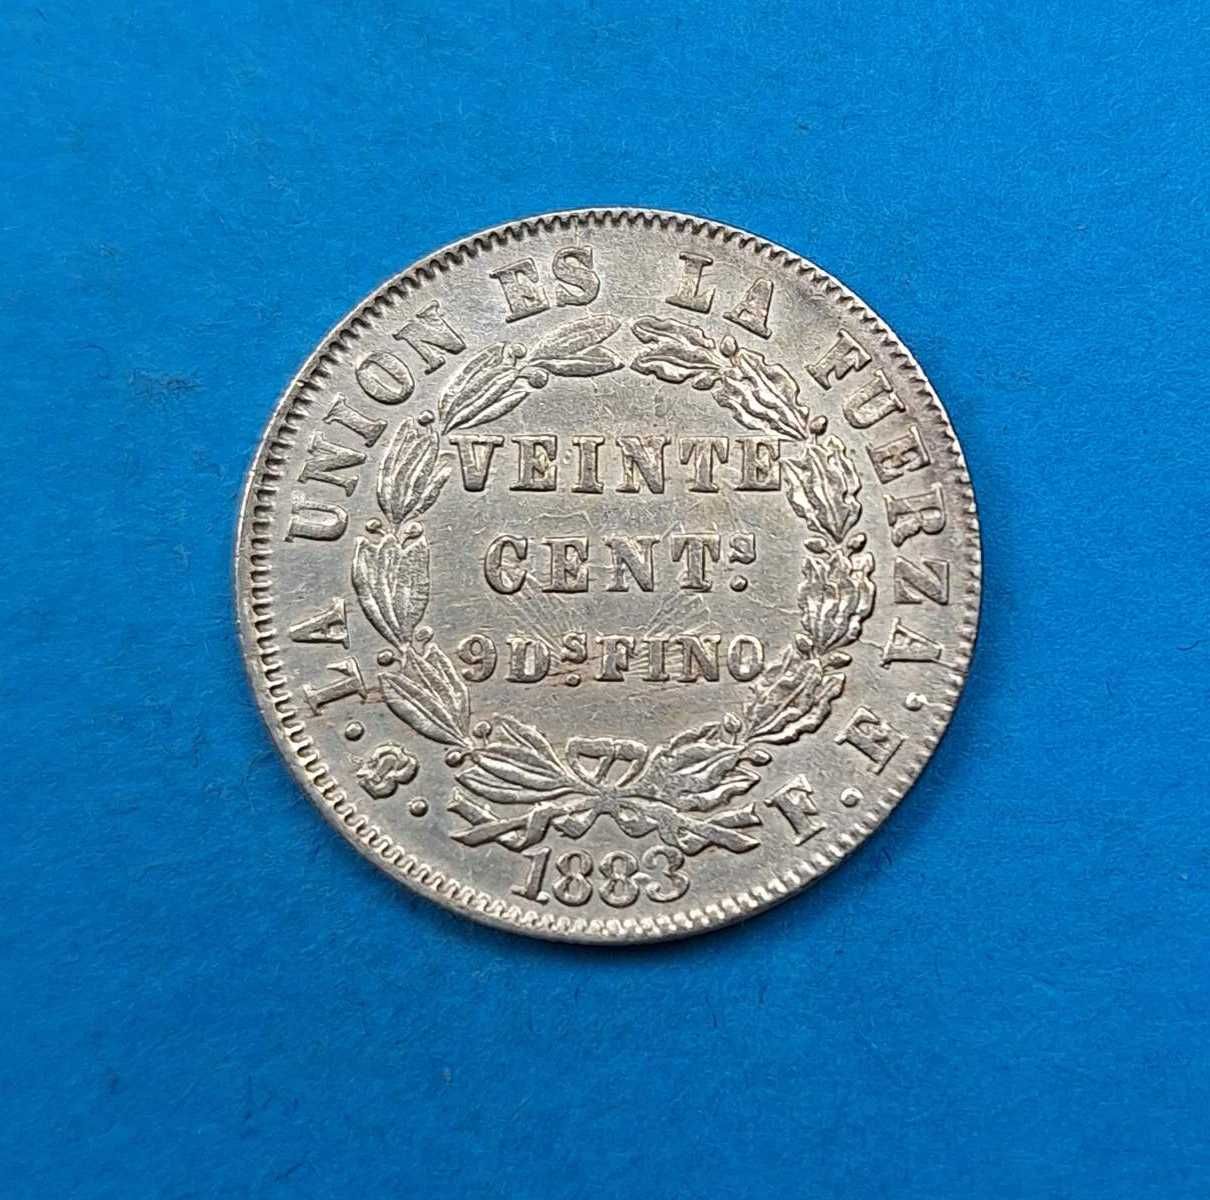 Boliwia 20 centavo rok 1883, bardzo dobry stan, srebro 0,900